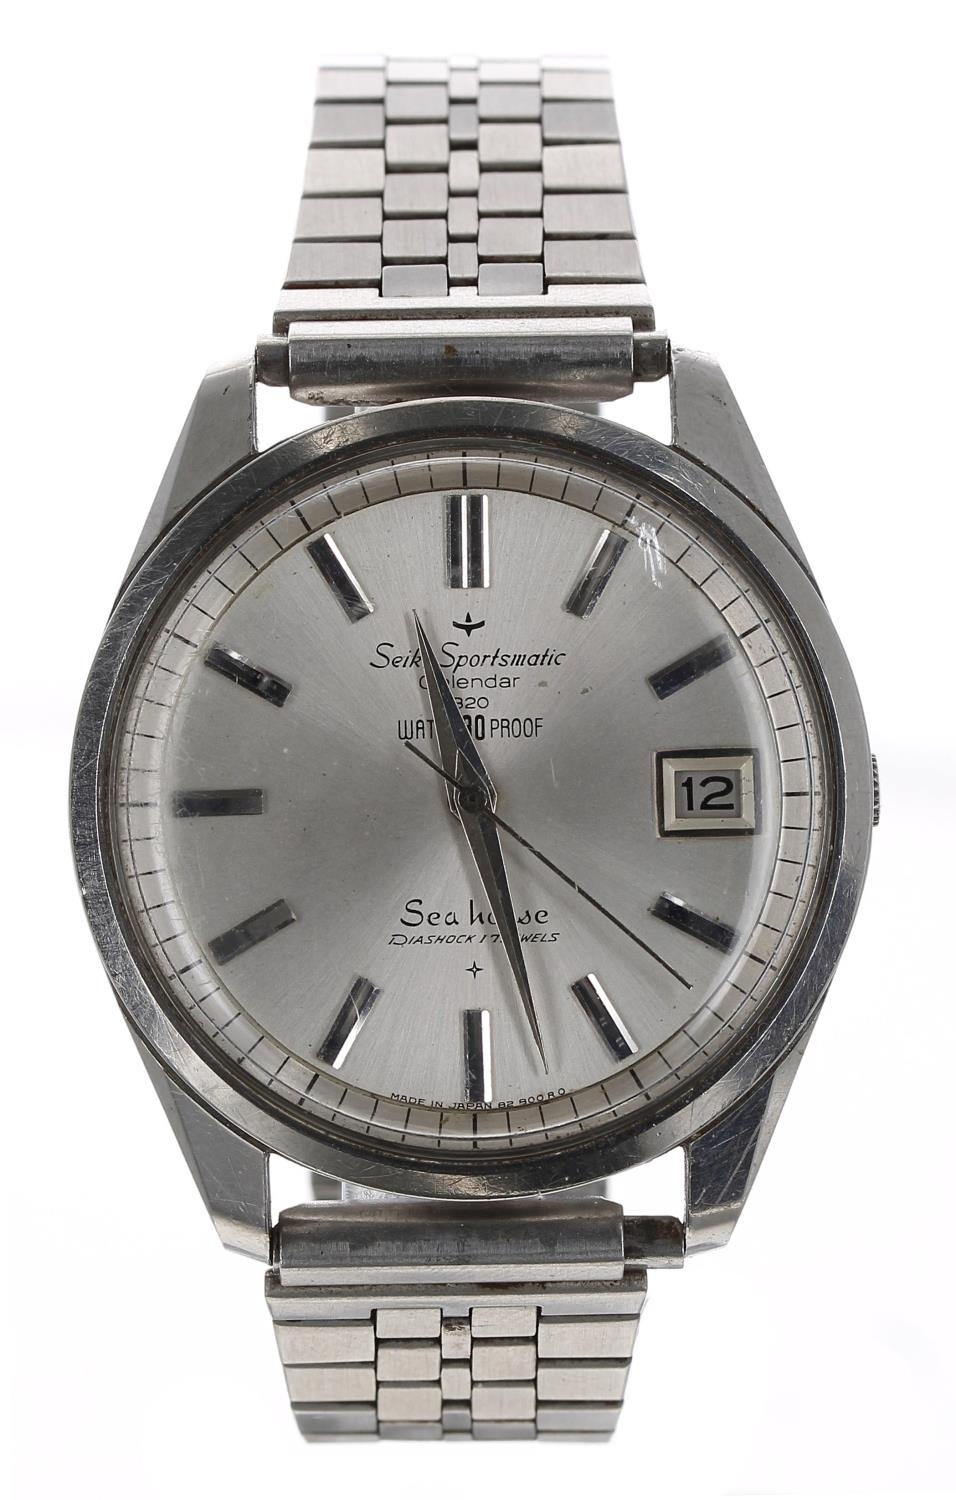 Seiko Sportsmatic Calendar 820 Sea Horse automatic stainless steel gentleman's wristwatch,